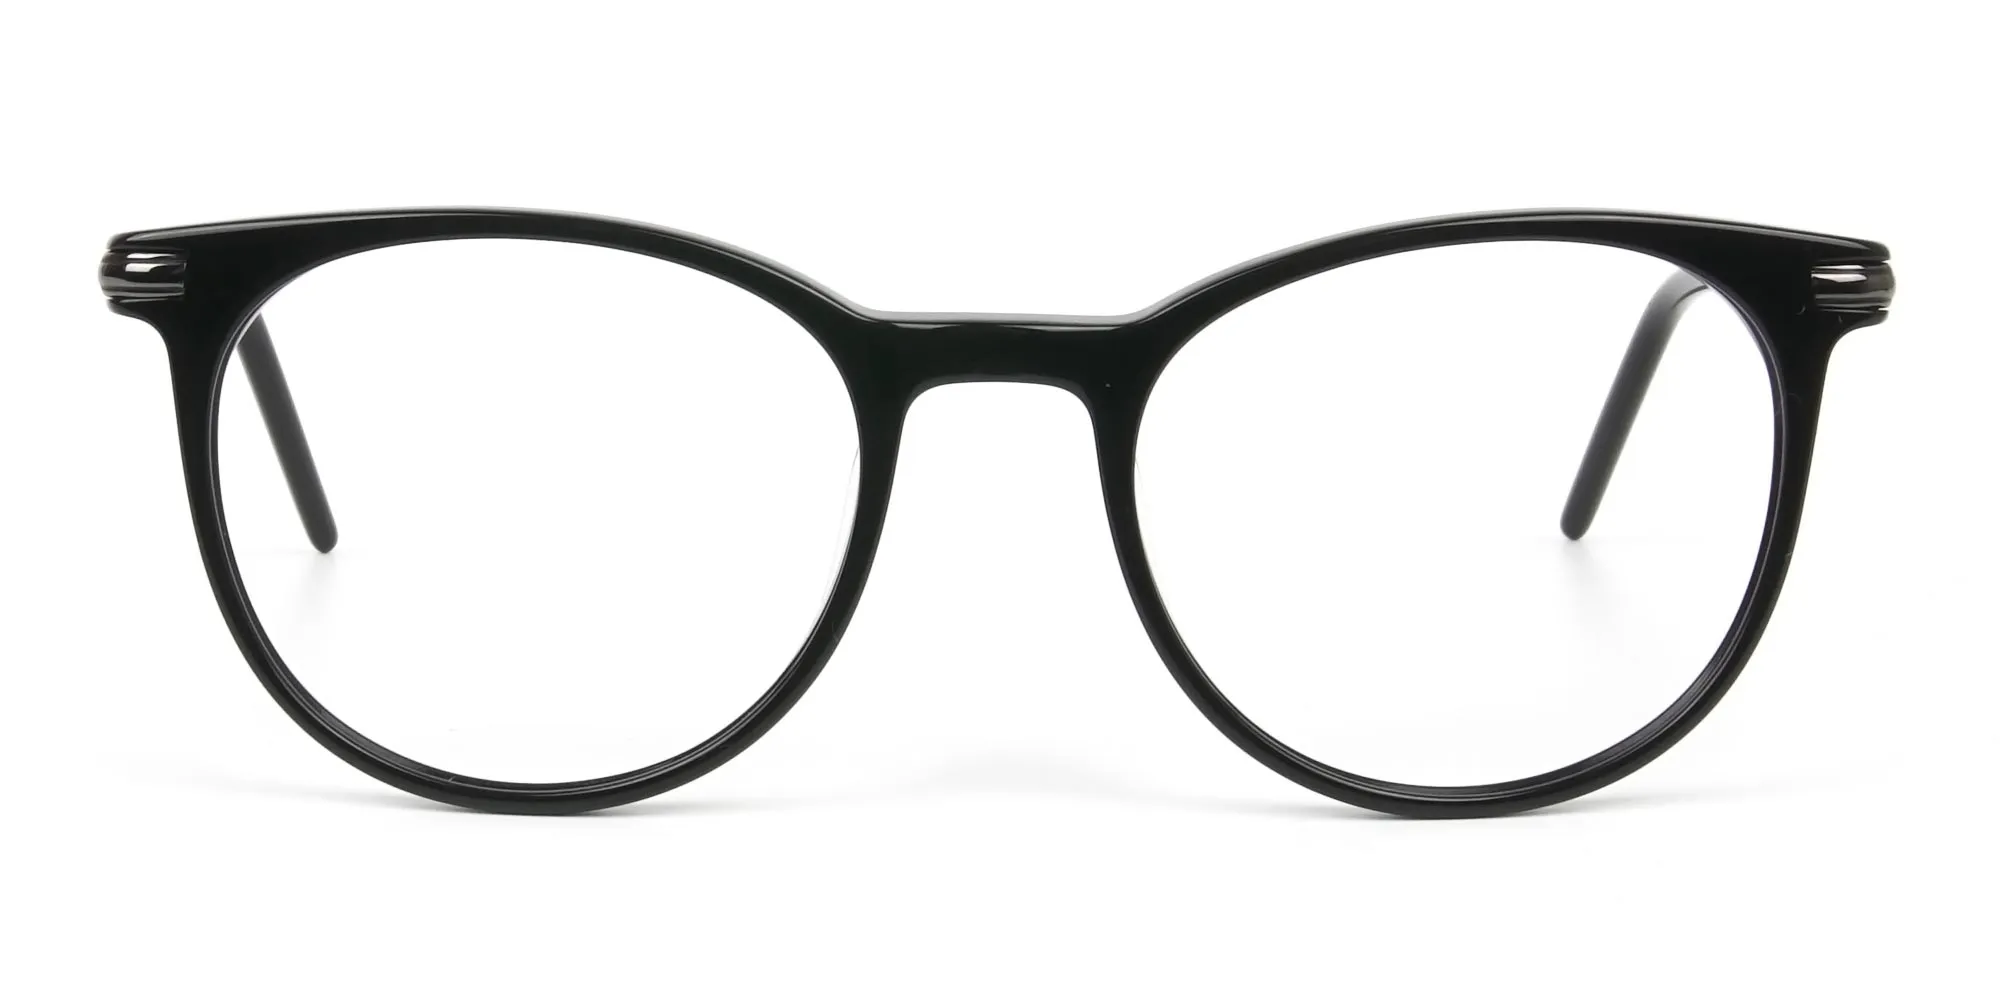 Black Round Spectacles in Acetate - 2